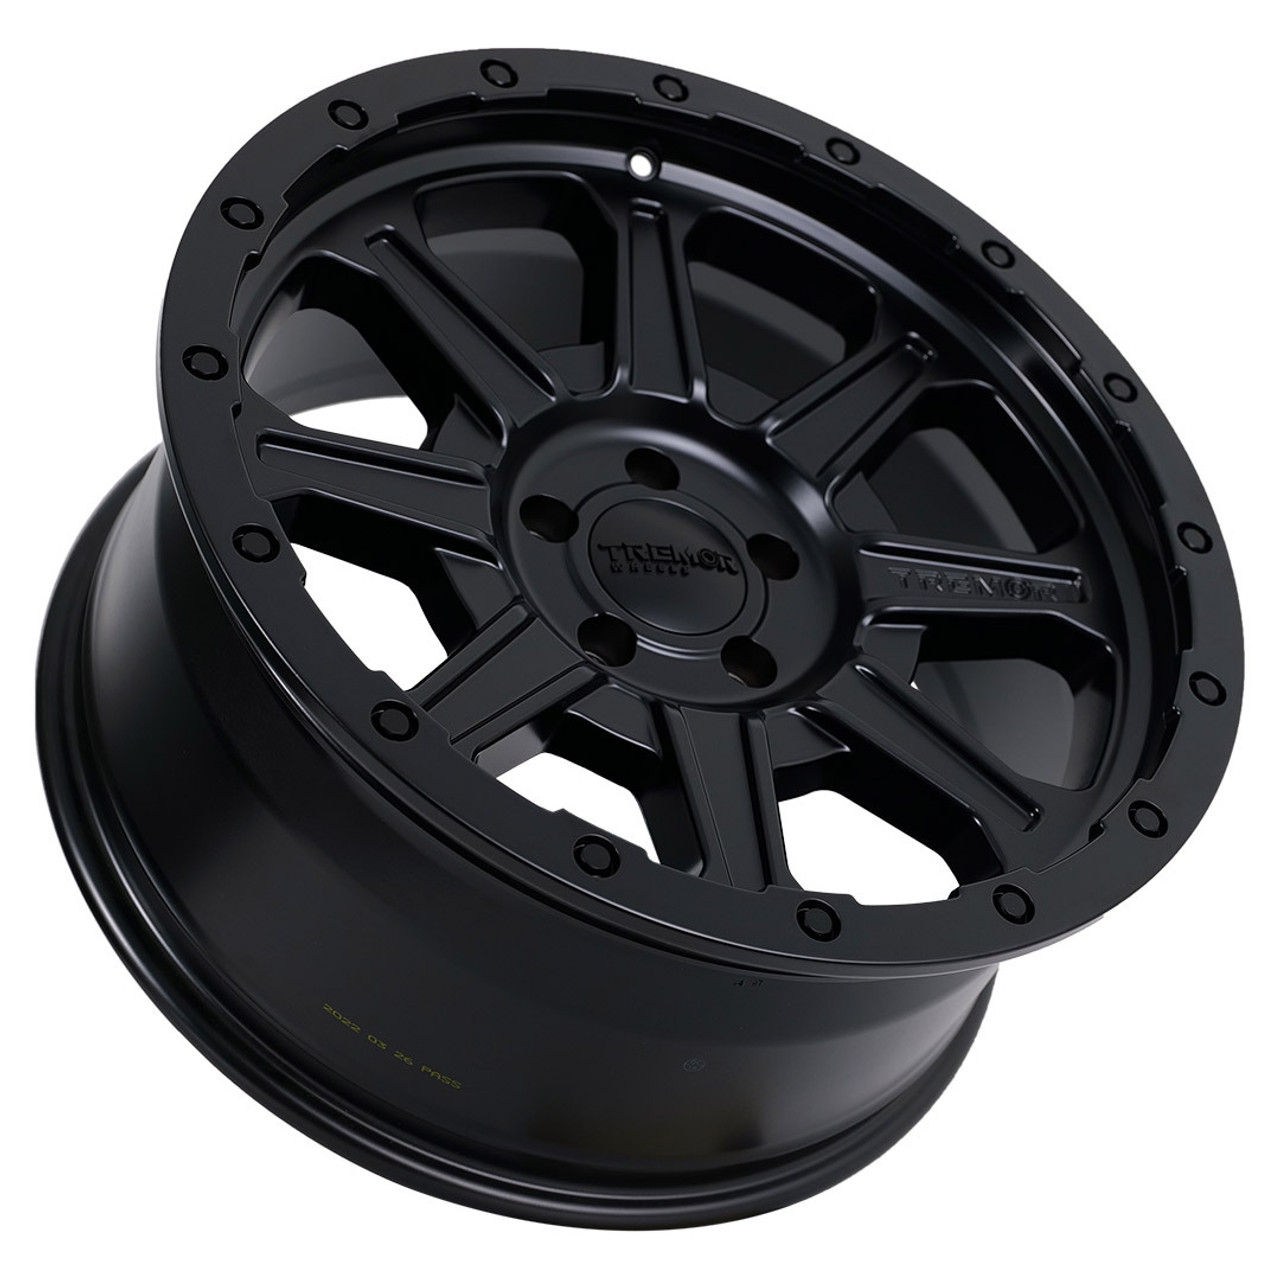 Set 4 20" Tremor 103 Impact Satin Black Wheel 20x9 6x135 0mm For Ford Lincoln